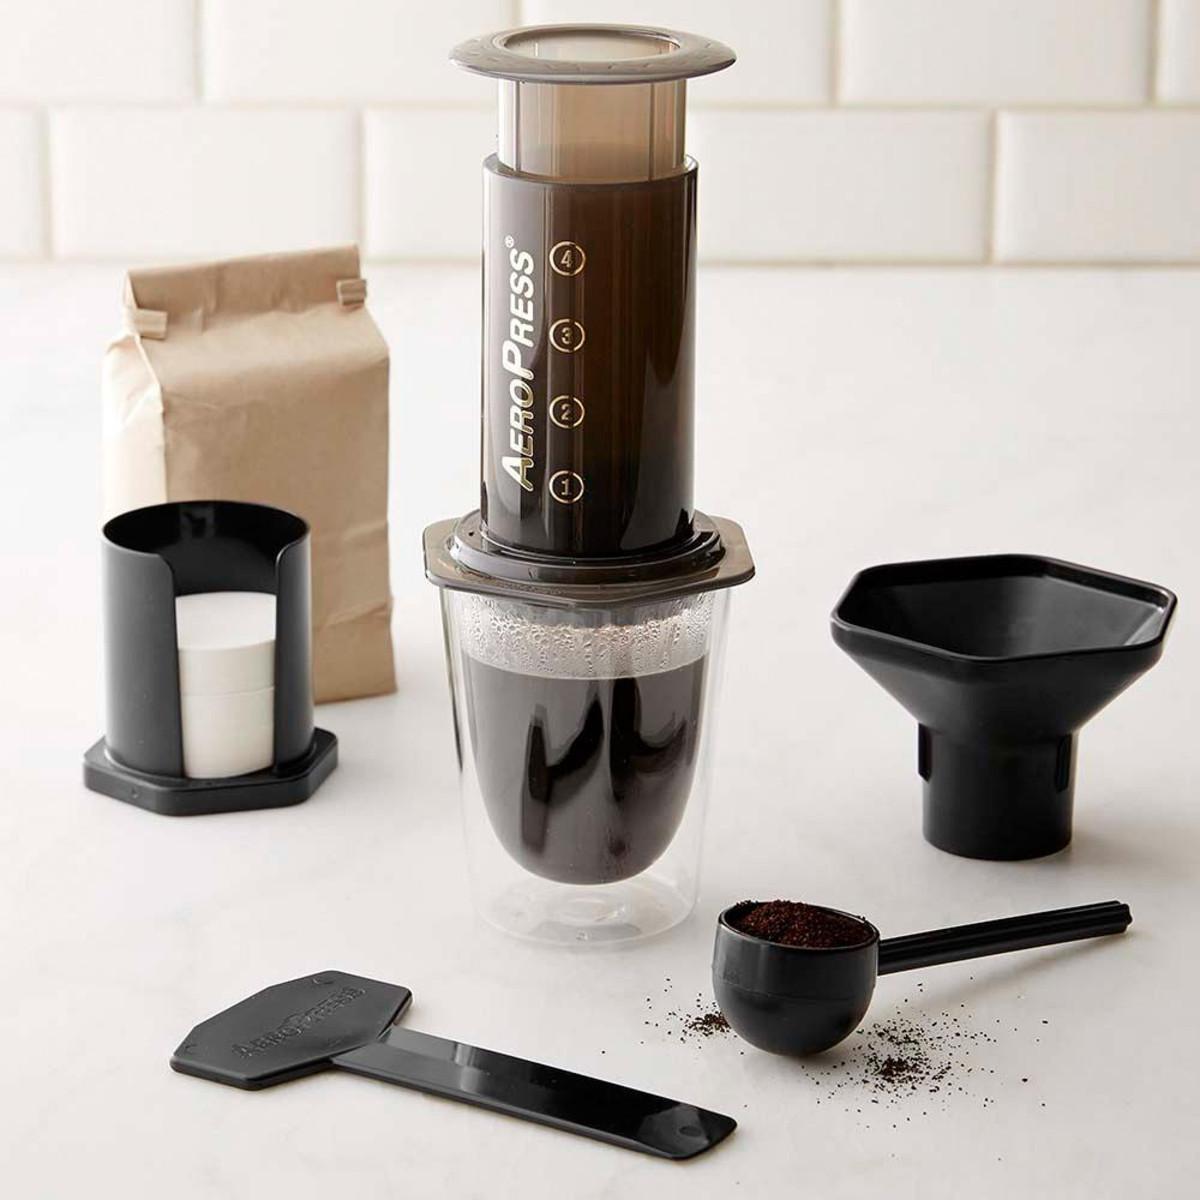 Kaffee kochen Aeropresse Anleitung Kaffee fein mahlen Kaffeebohnen Sorten Espresso